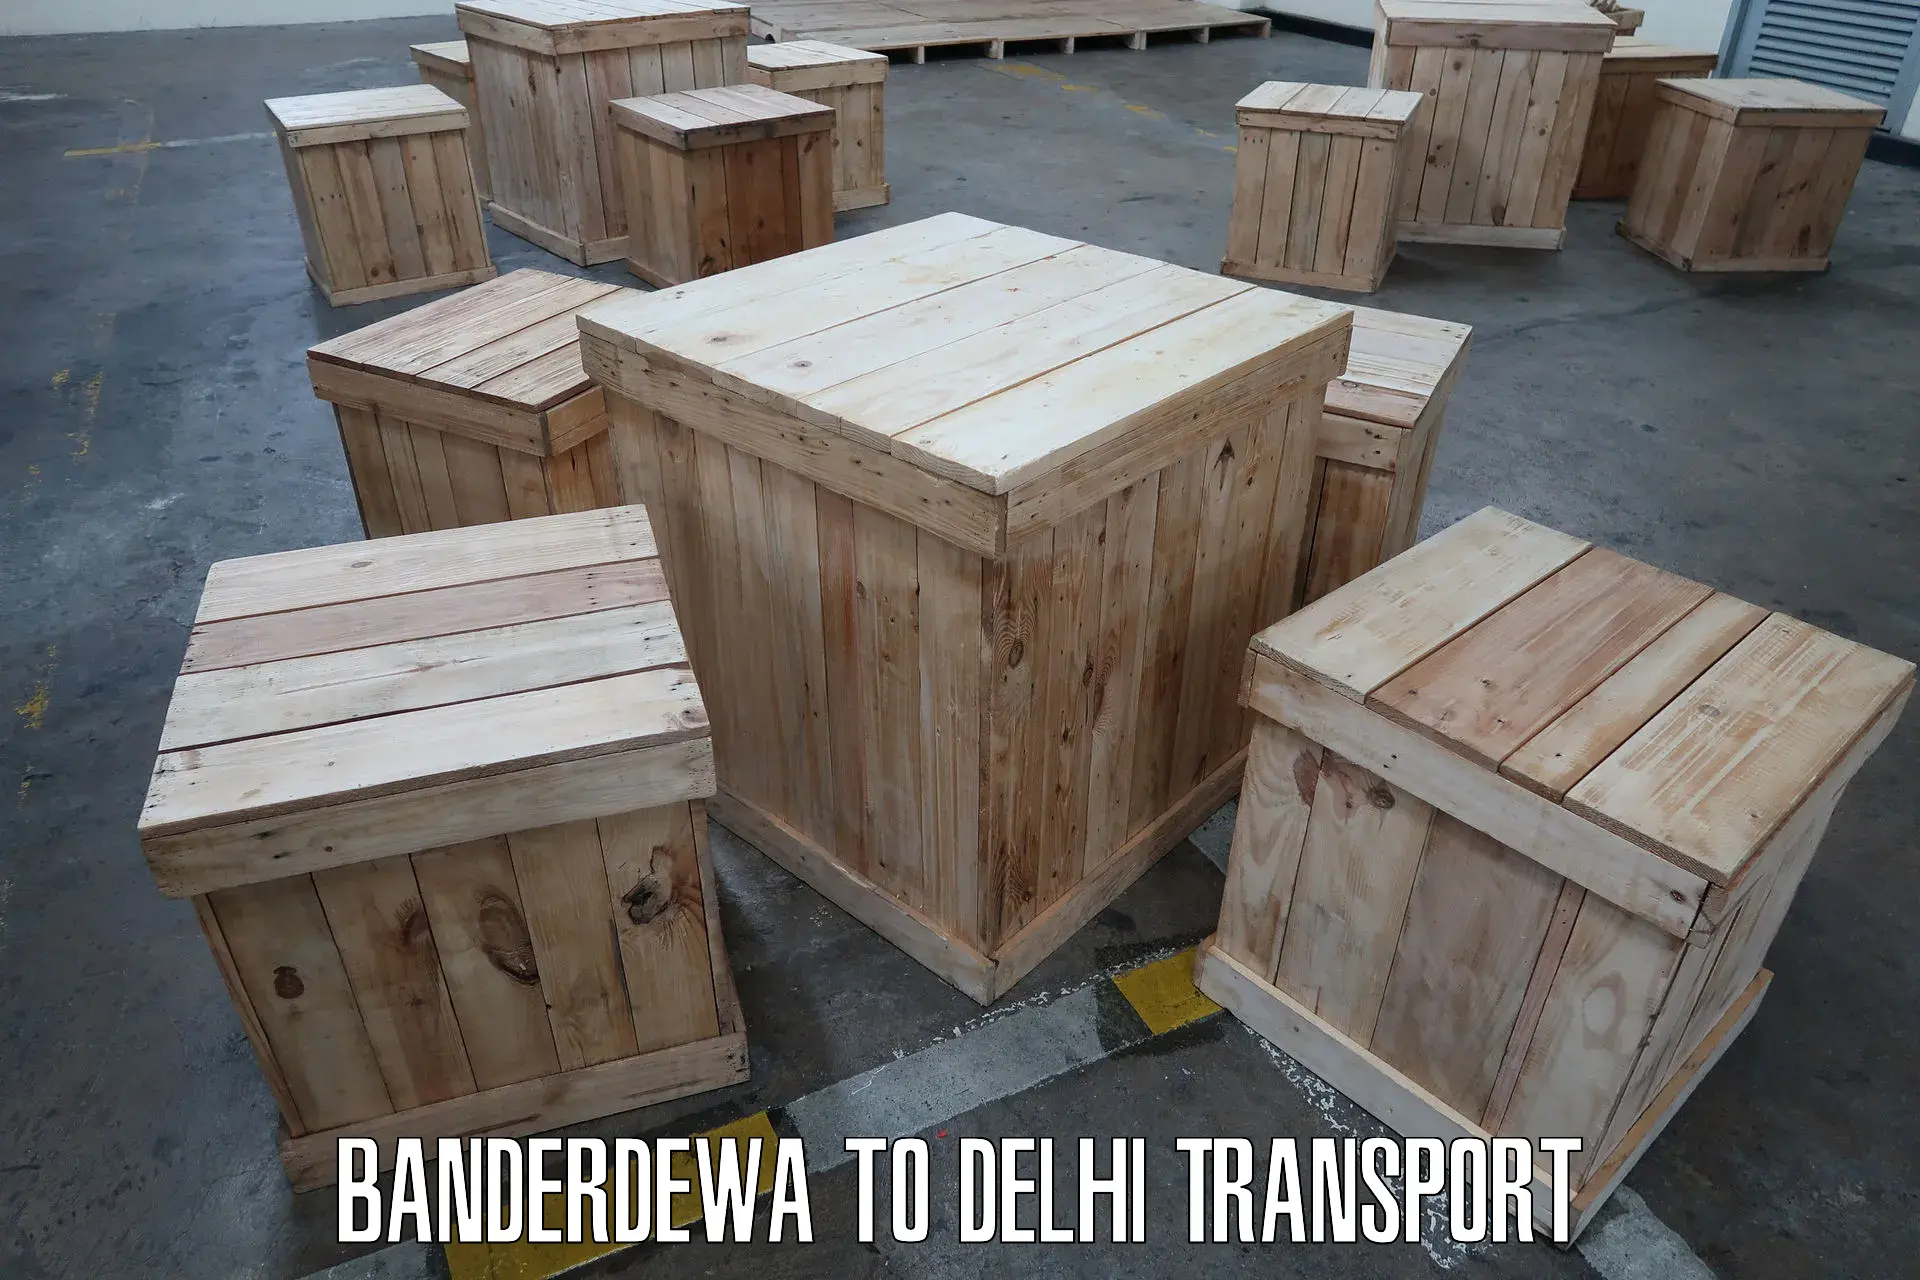 Sending bike to another city Banderdewa to University of Delhi